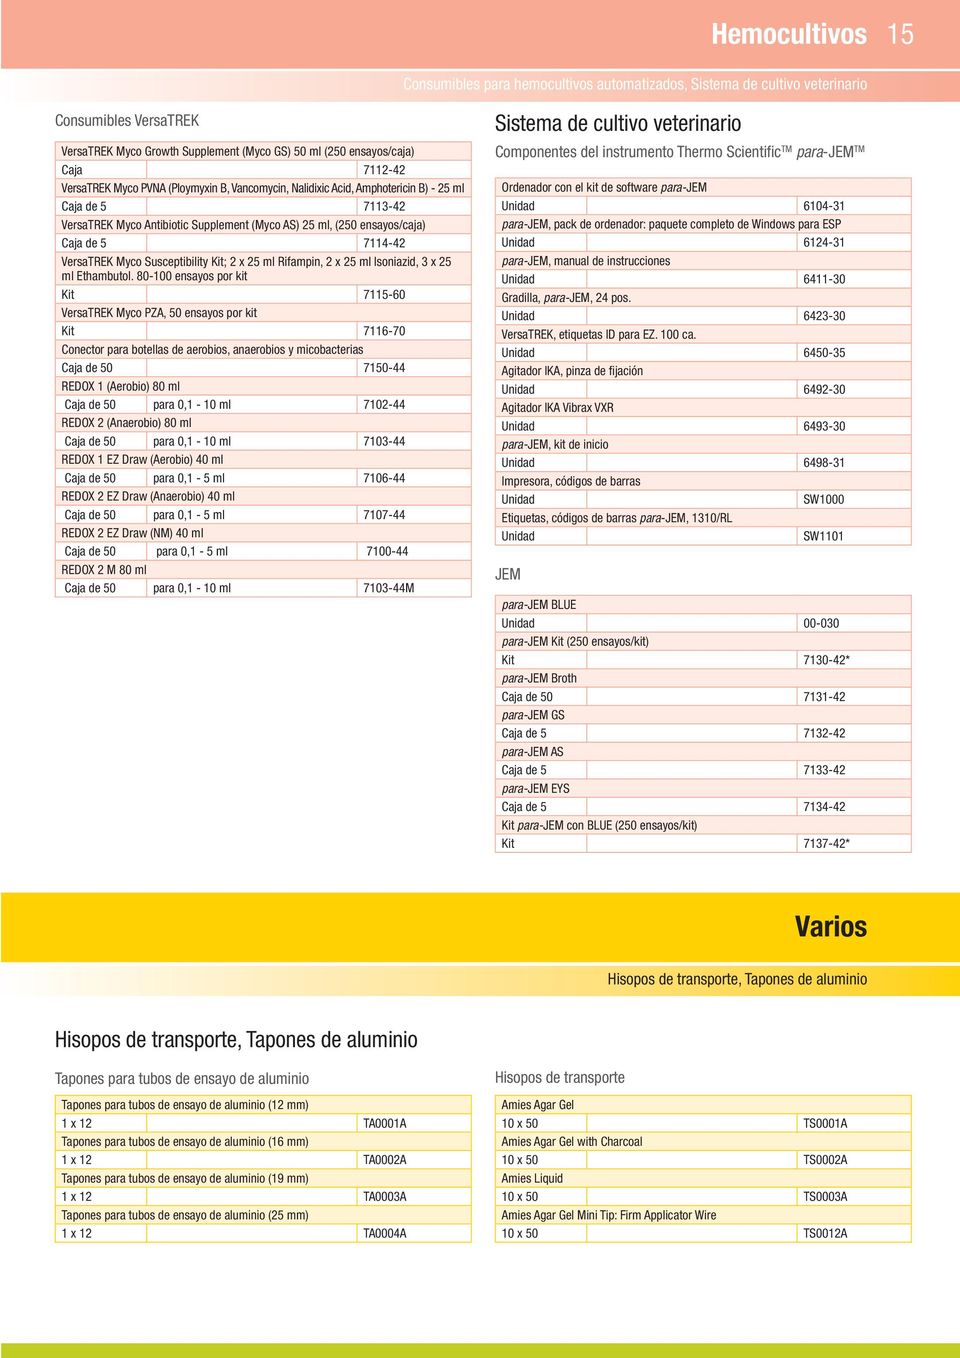 VersaTREK Myco Susceptibility Kit; 2 x 25 ml Rifampin, 2 x 25 ml Isoniazid, 3 x 25 ml Ethambutol.